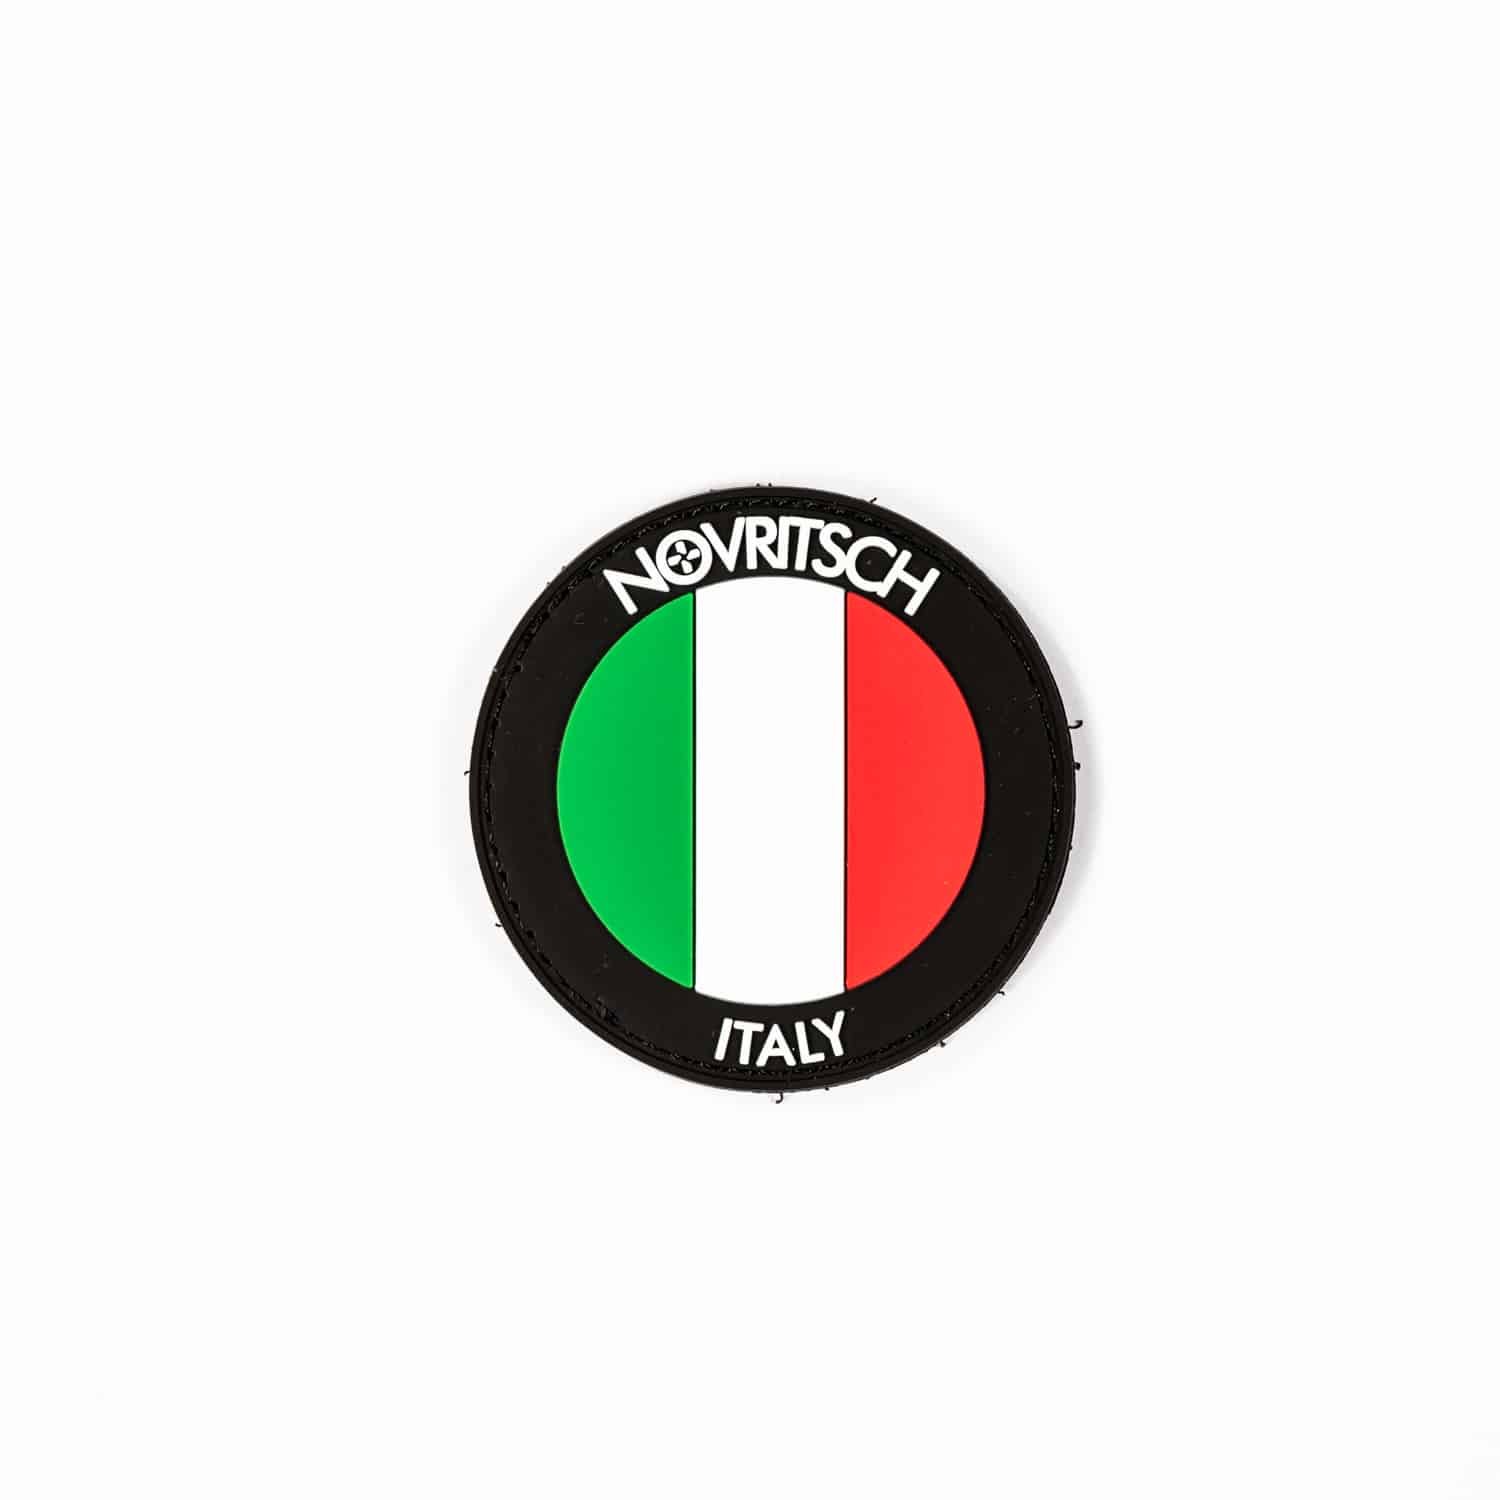 Paese Patch Italia - Novritsch